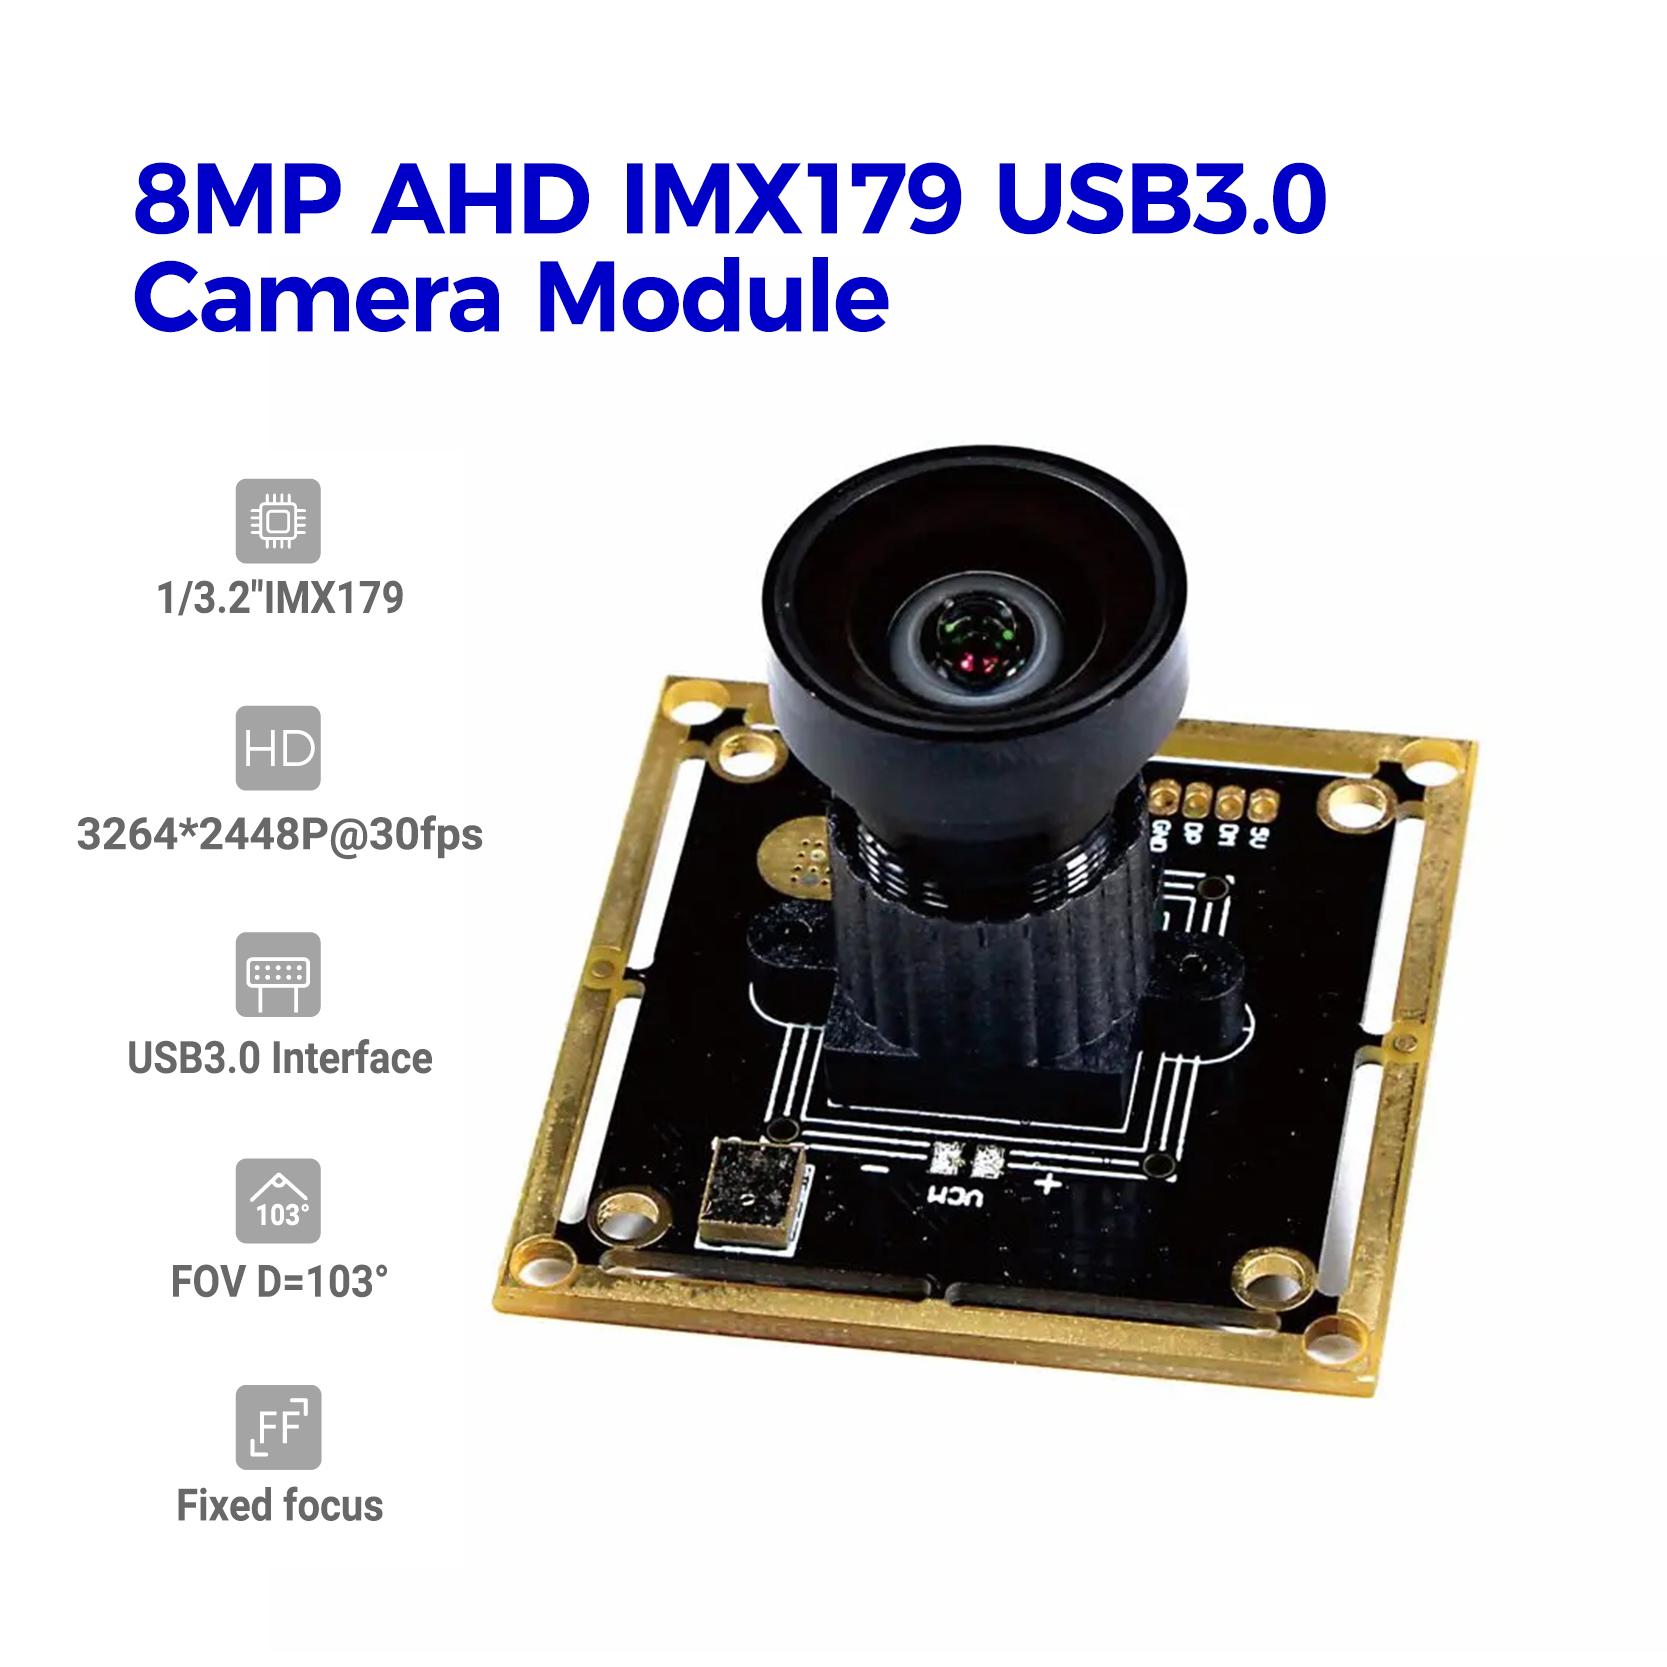 Customized 8MP IMX179 AHD USB3.0 Camera Module Featured Image